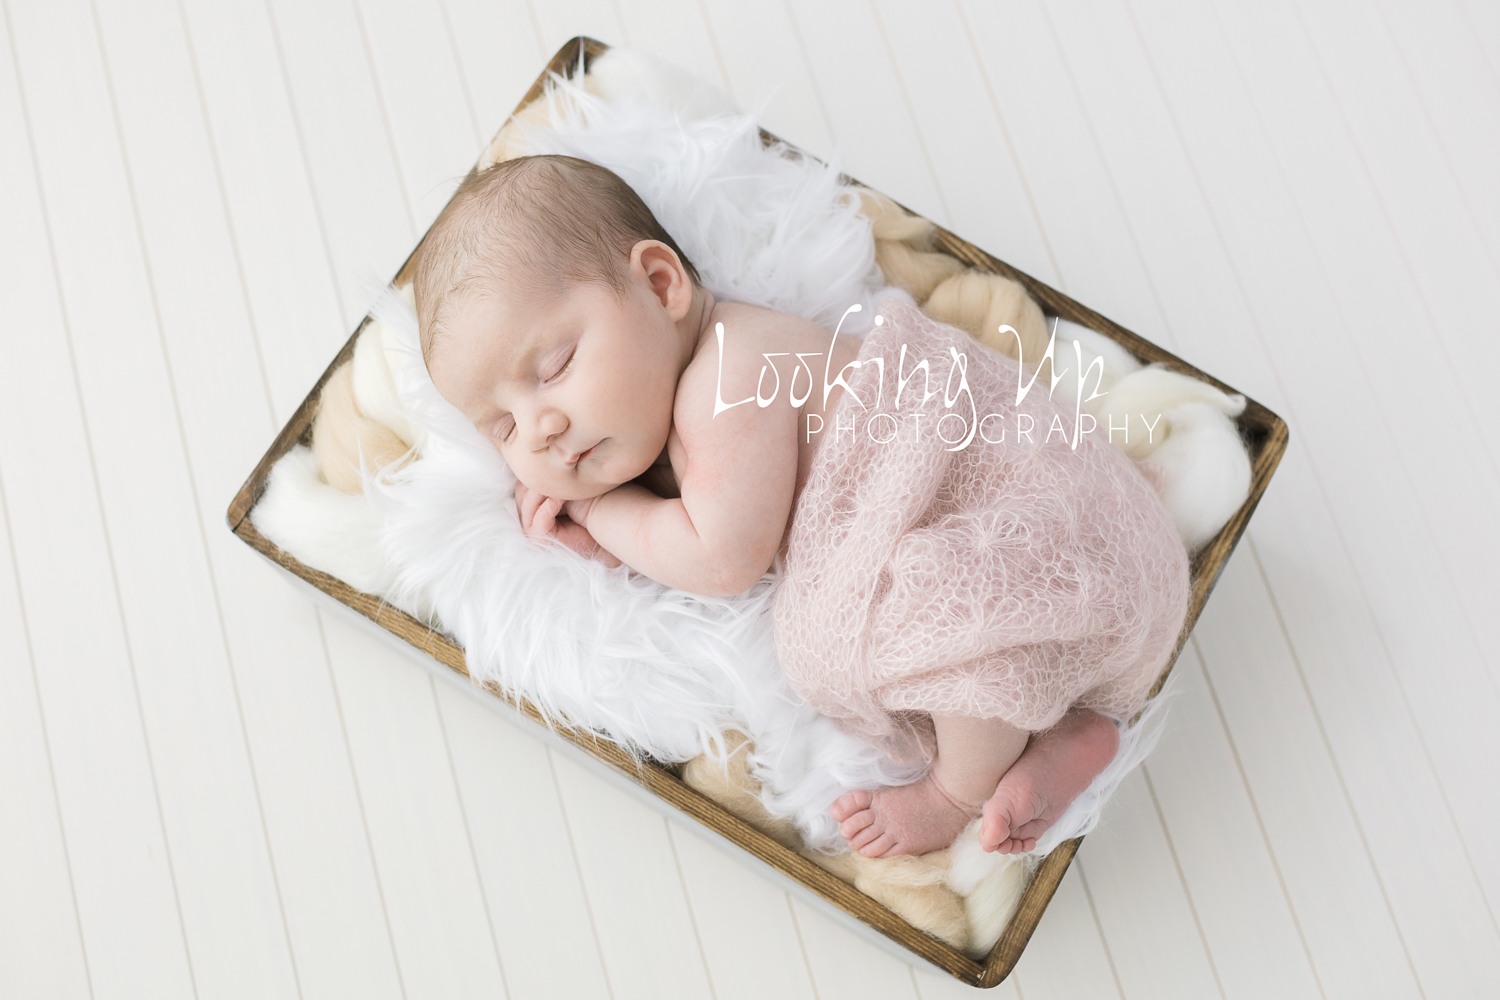 BABY SISTER MAKES FOUR {FAIRFIELD COUNTY NEWBORN PHOTOGRAPHY}